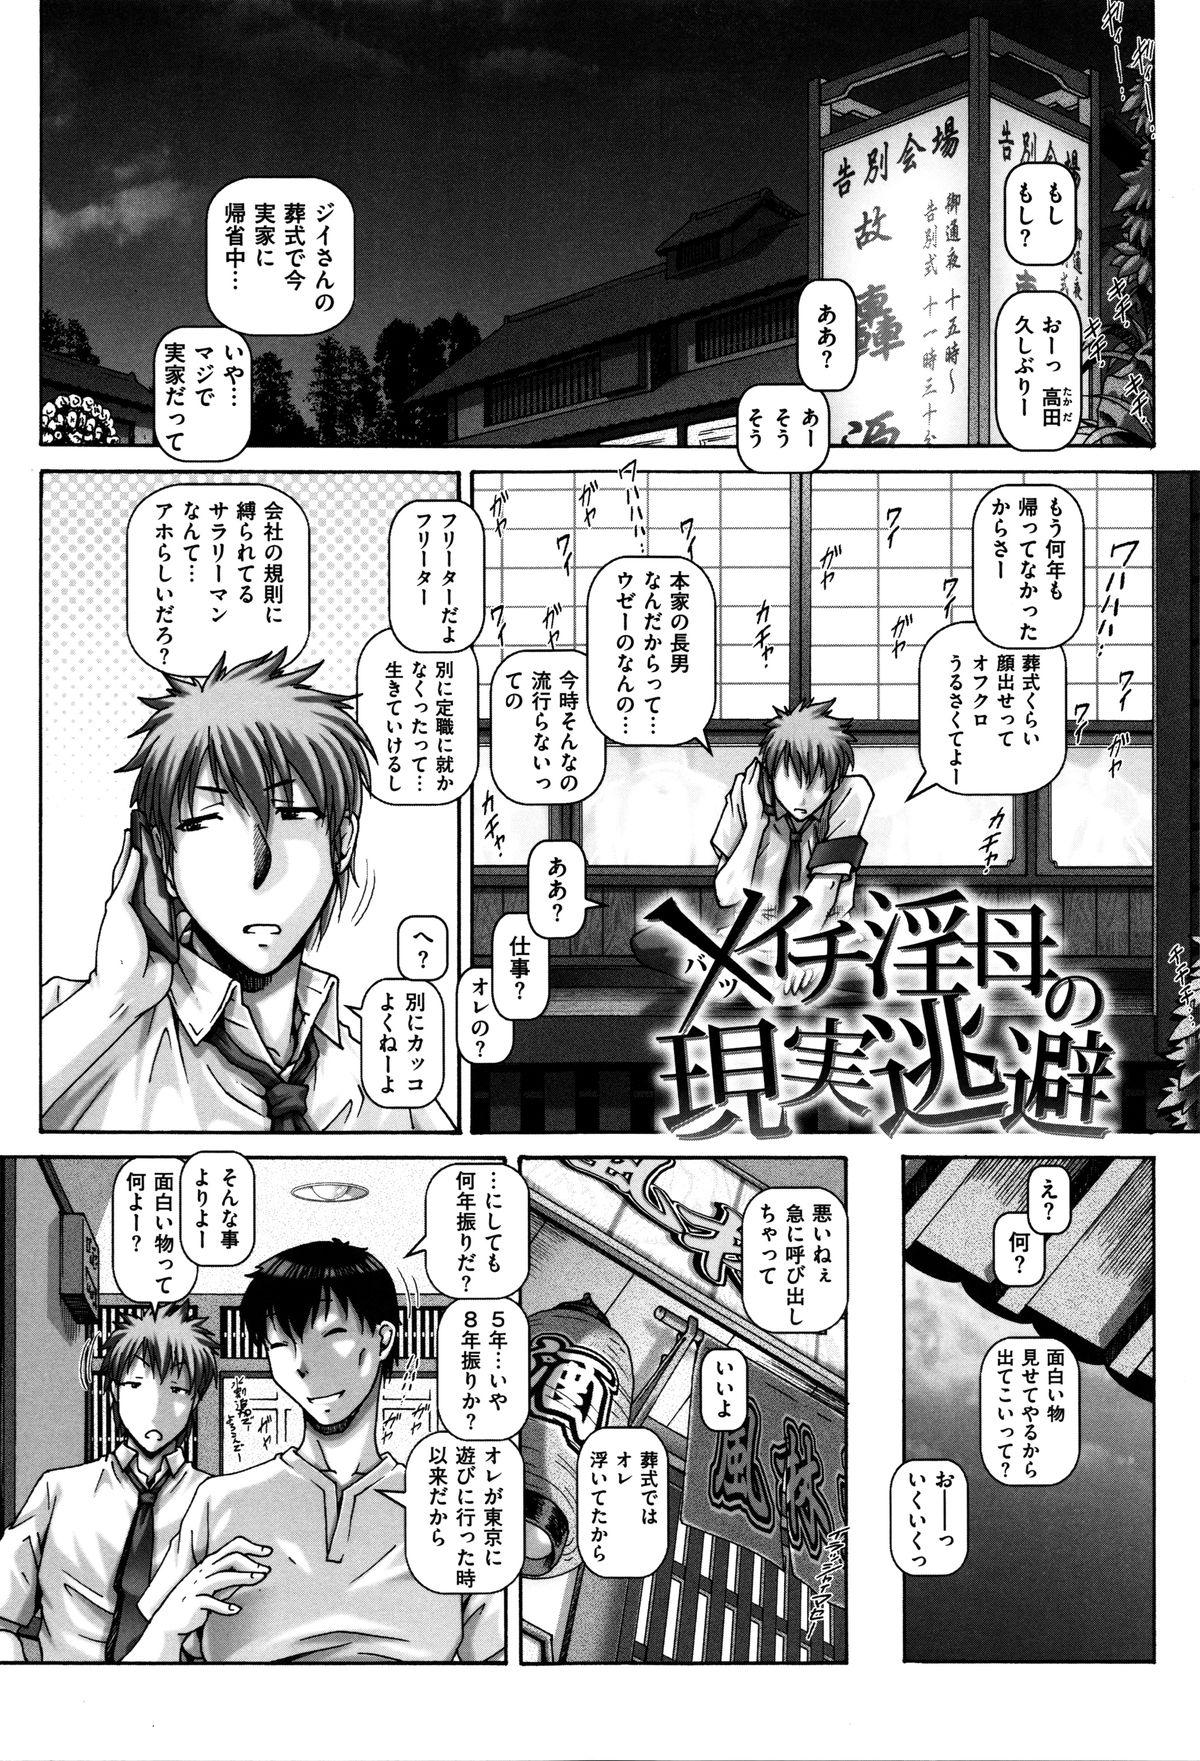 Motel Kachiku Ane - chapter 1,5,7 & 9 Twerk - Page 2